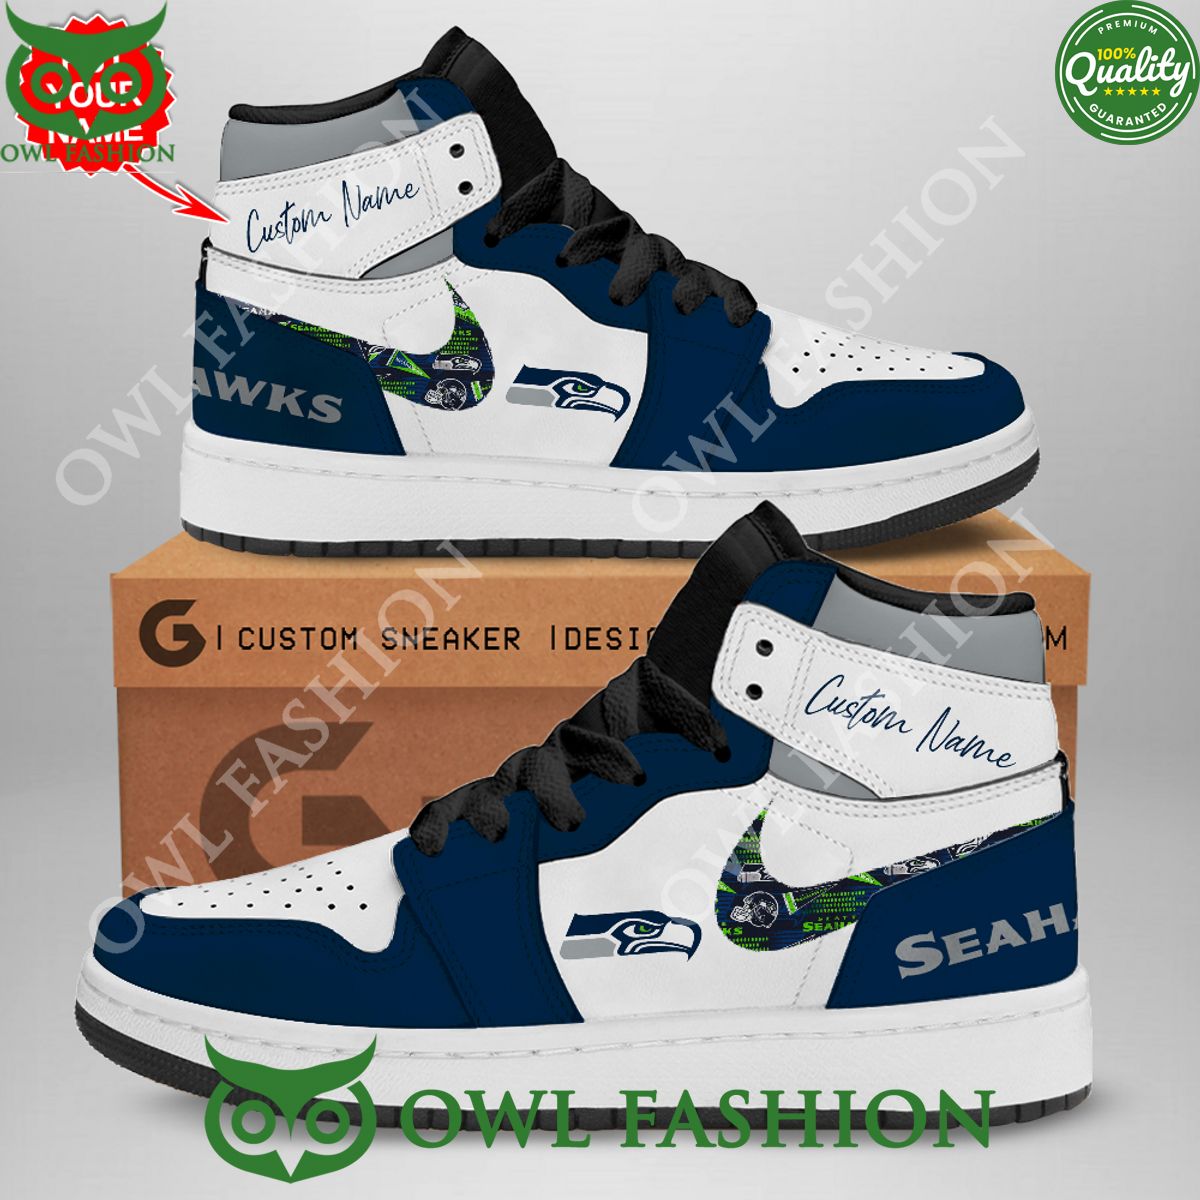 Seattle Seahawks NFL Personalized Air Jordan Sneakers